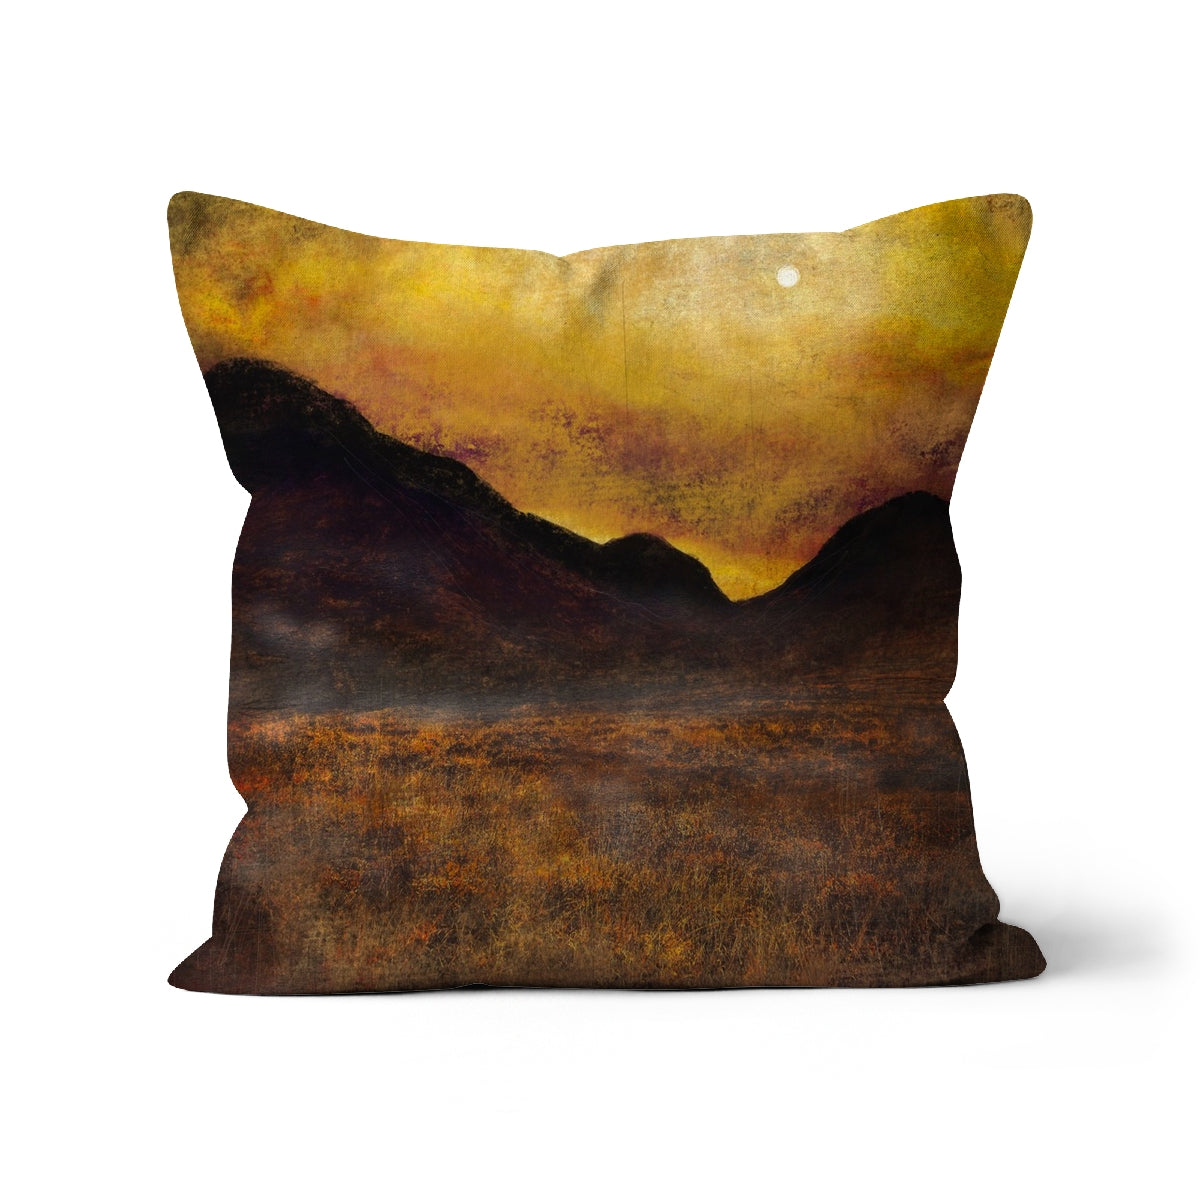 Glencoe Moonlight Art Gifts Cushion-Cushions-Glencoe Art Gallery-Canvas-18"x18"-Paintings, Prints, Homeware, Art Gifts From Scotland By Scottish Artist Kevin Hunter